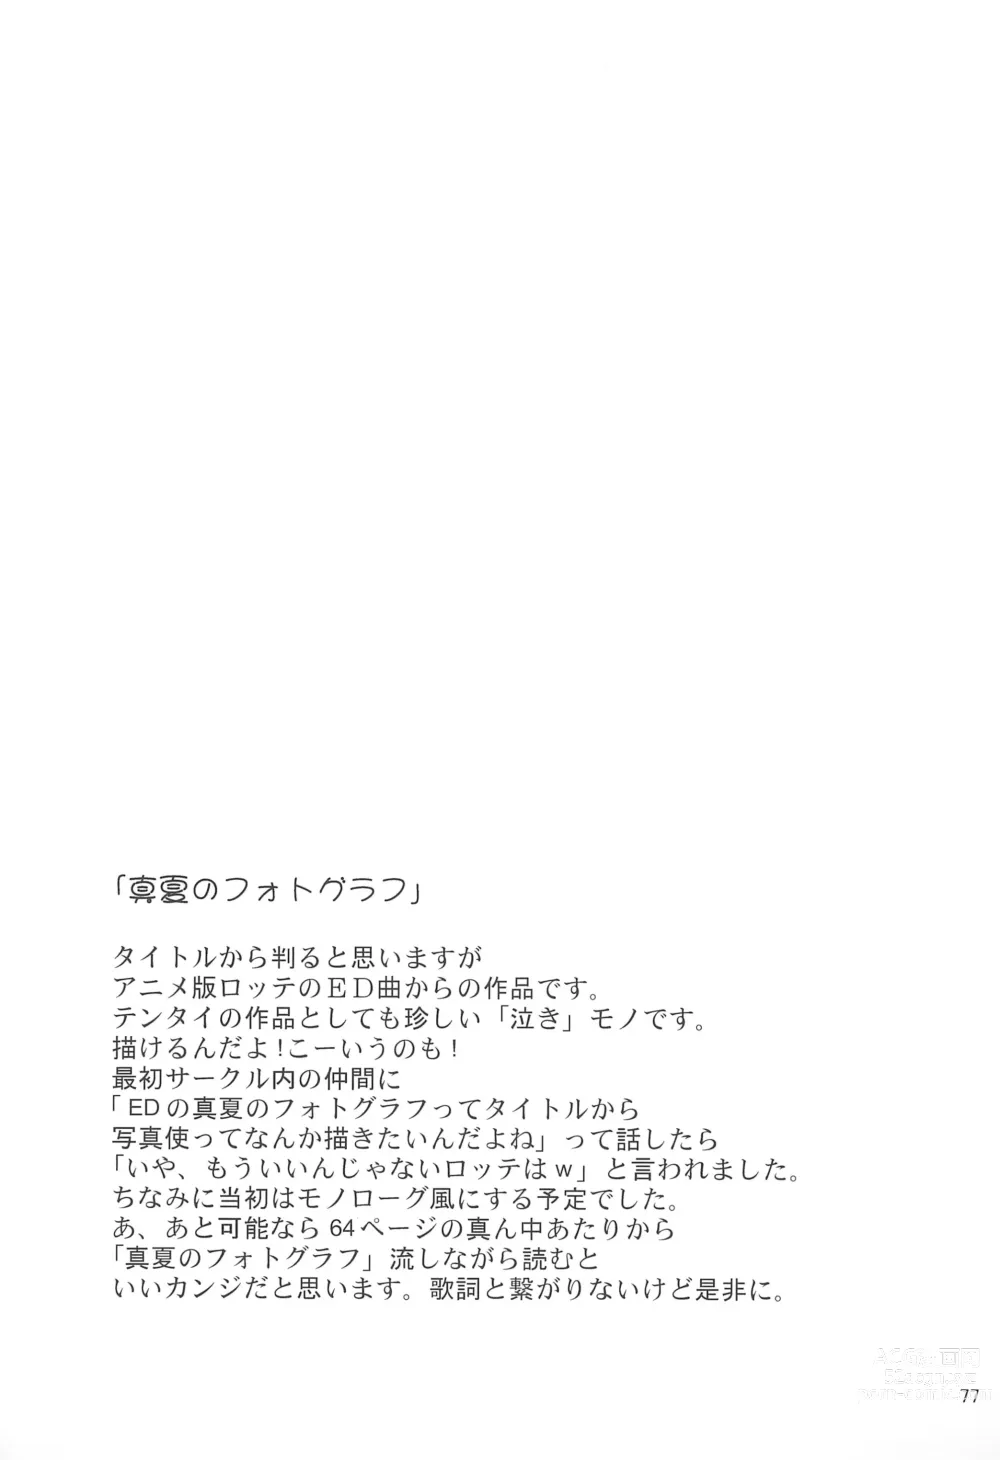 Page 77 of doujinshi Maigo no Maigo no Hime-sama Plus